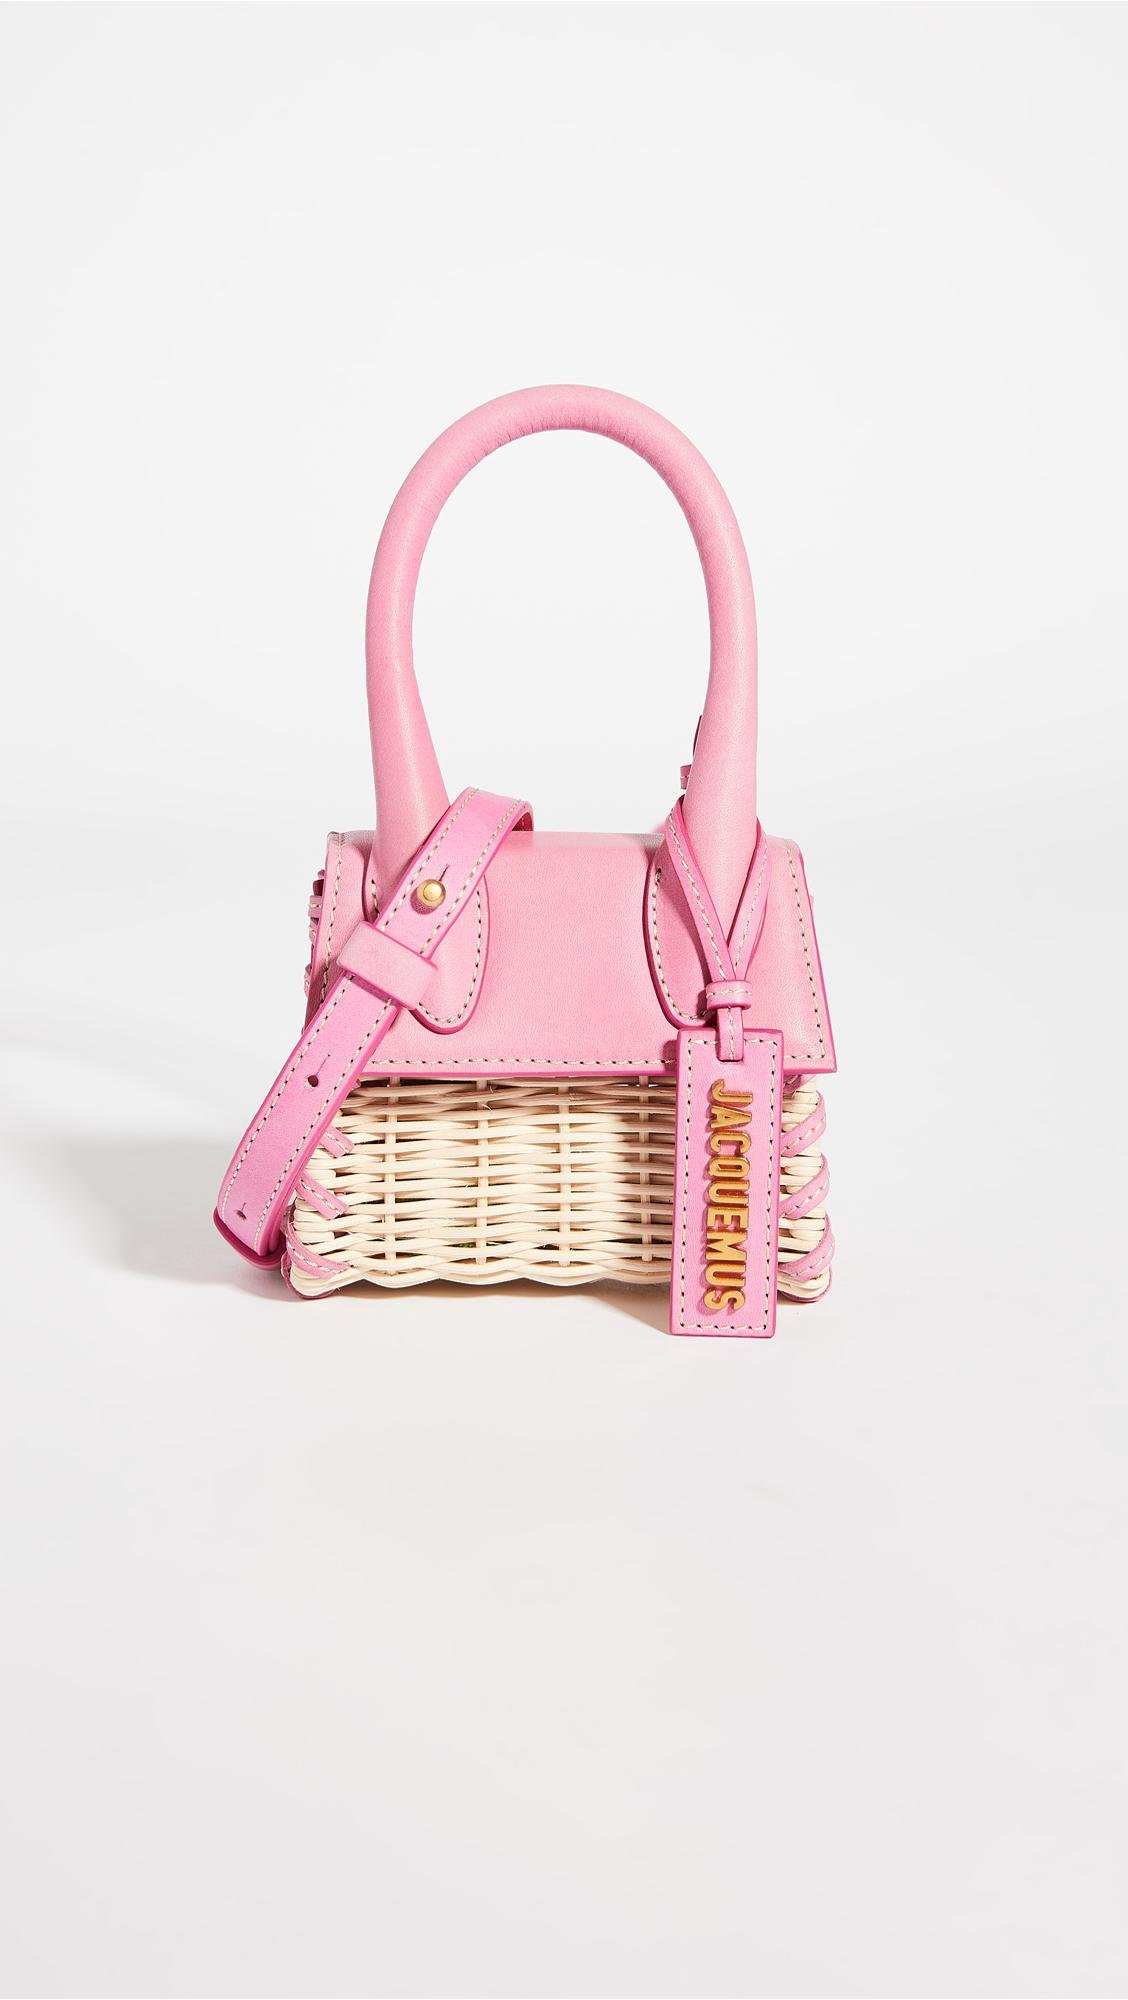 Jacquemus Le Chiquito Moyen Neon Pink Handbag – Leigh's of Breton Village